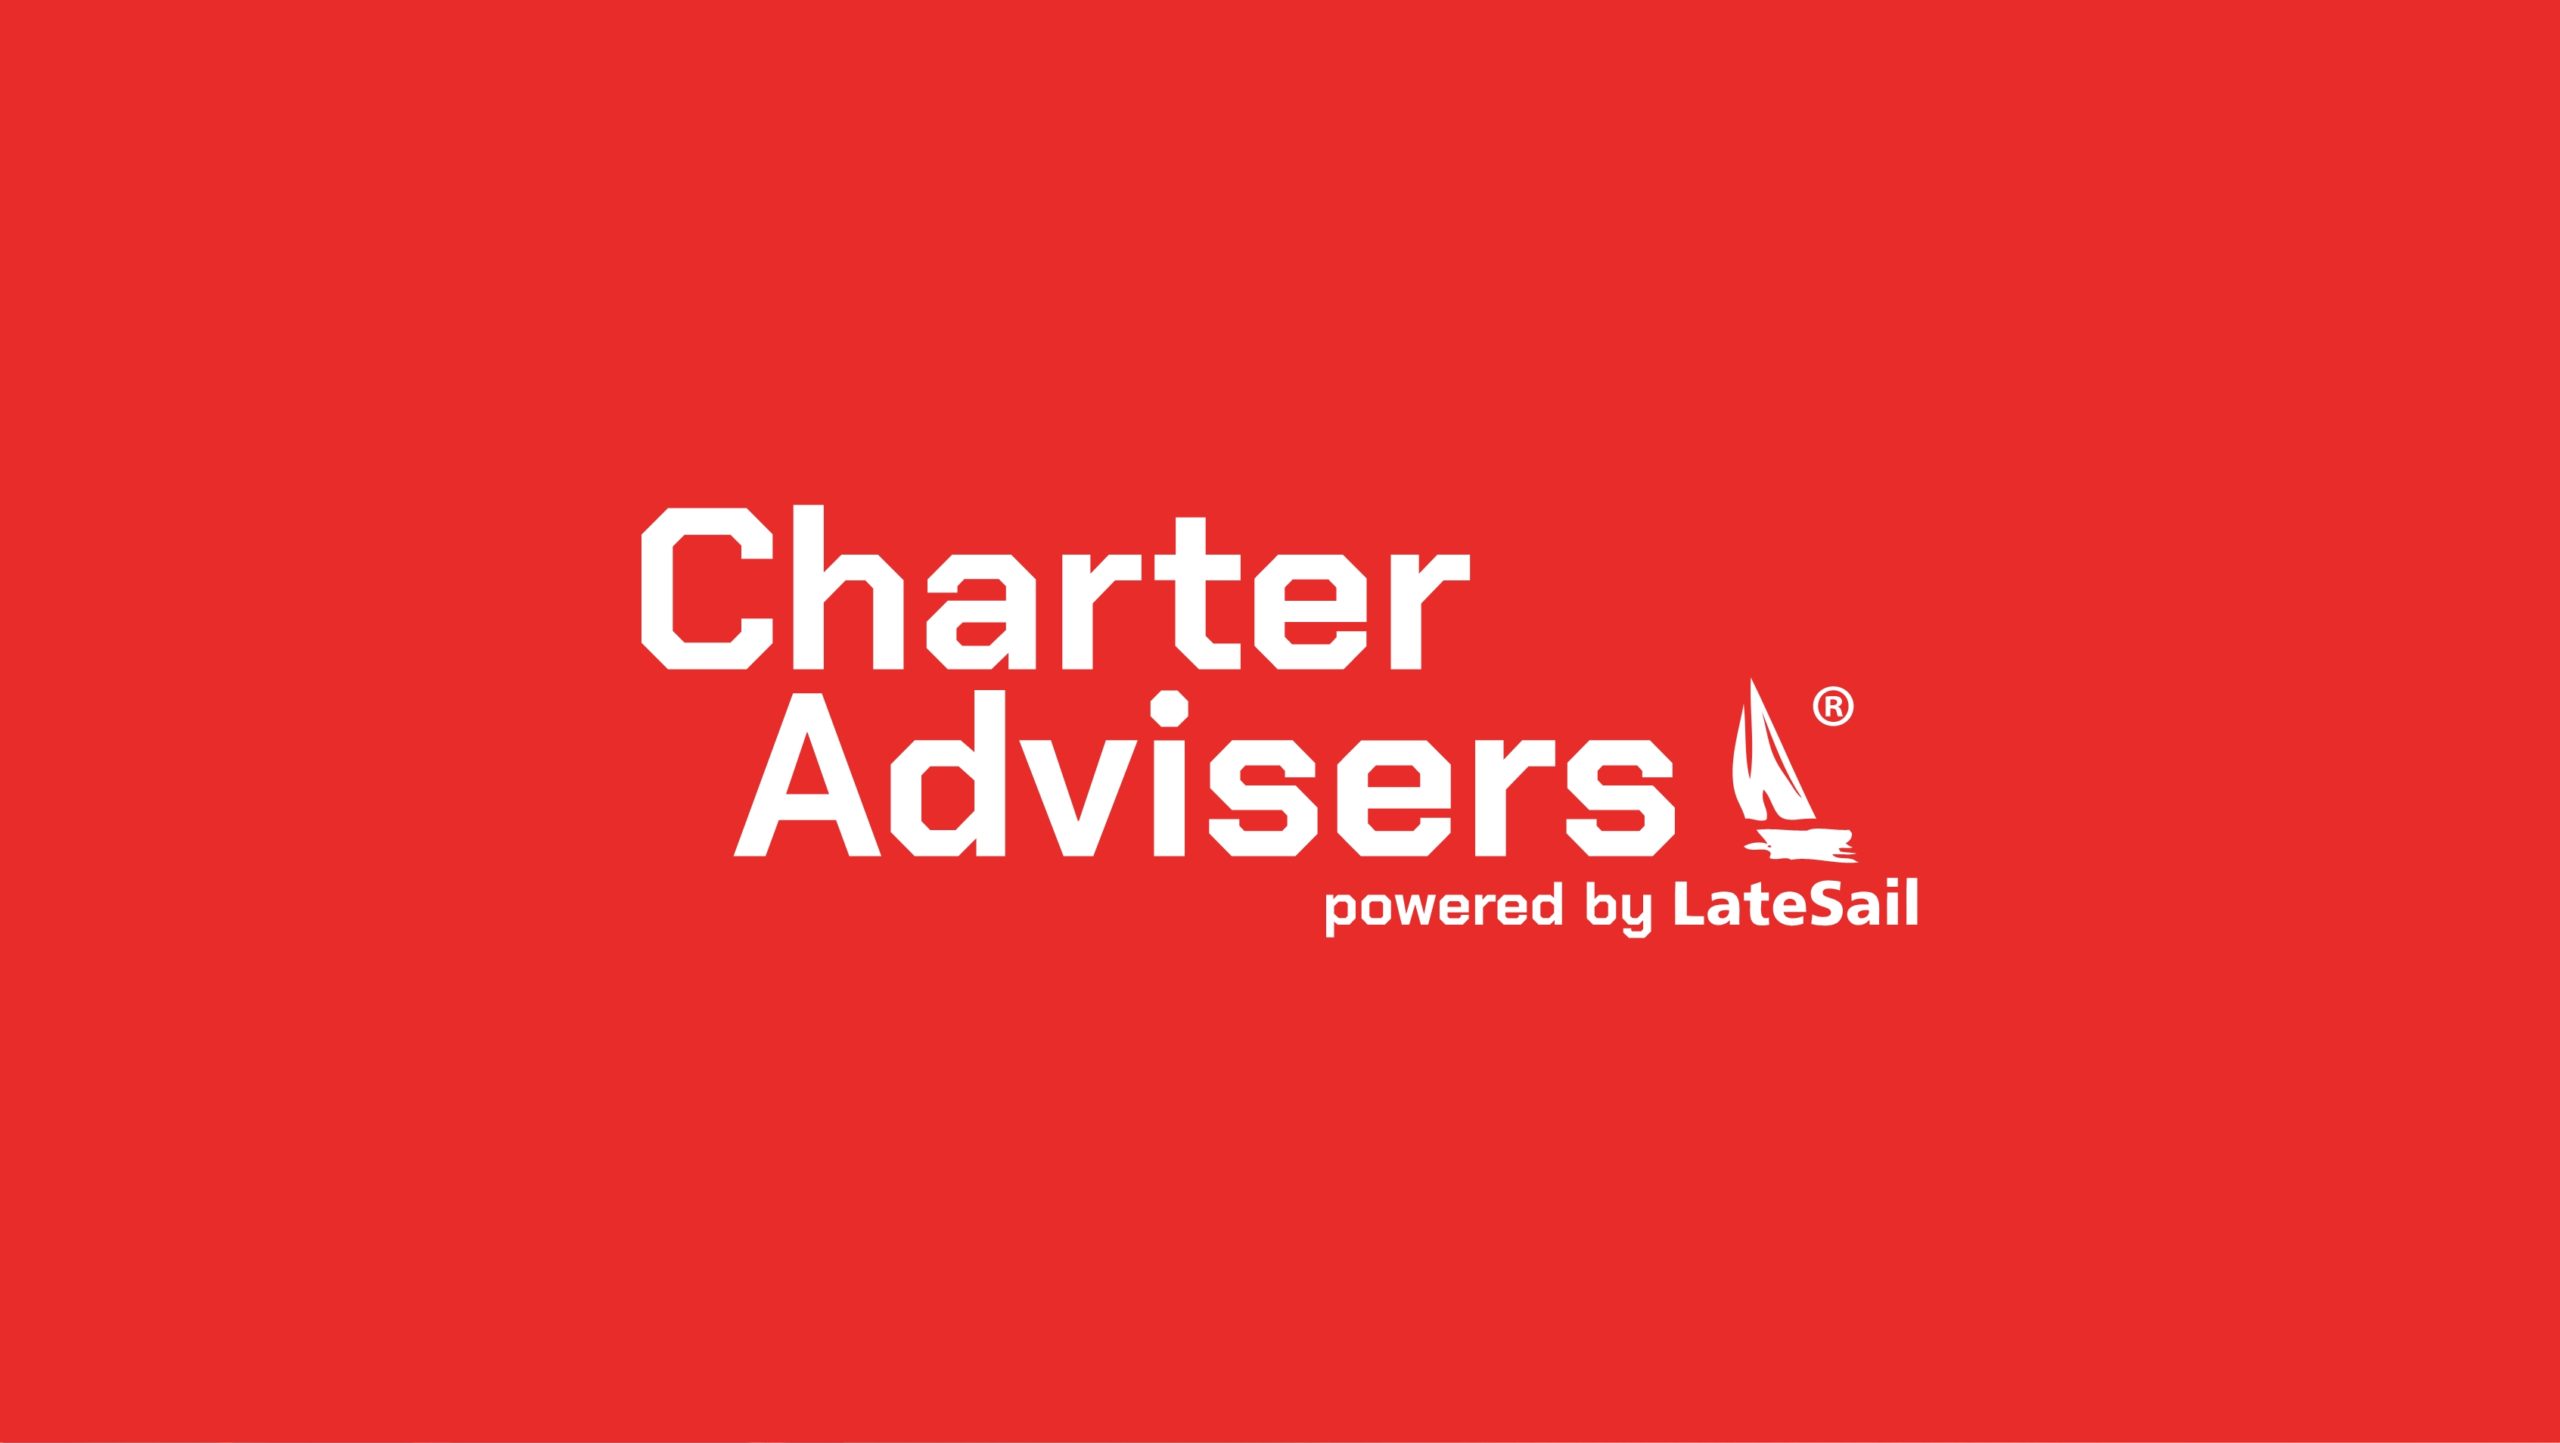 LateSail charter advisers